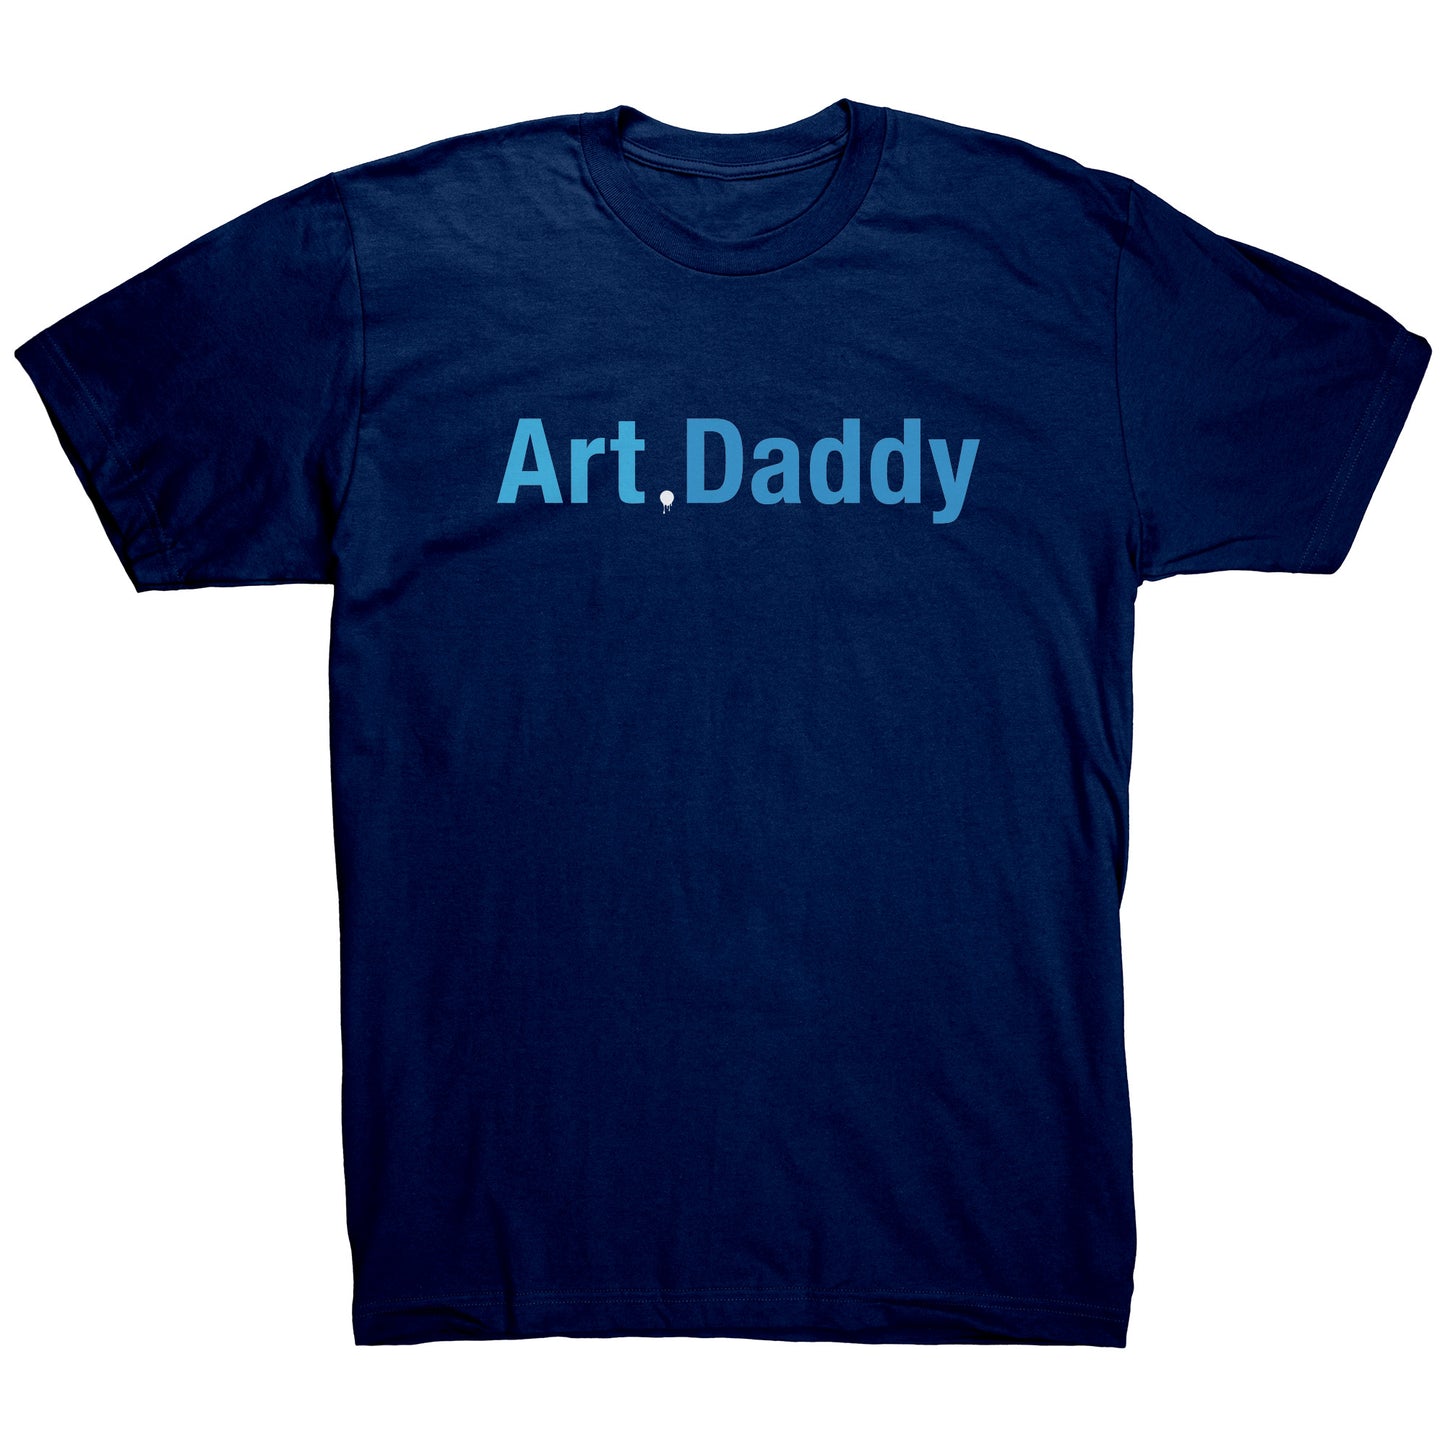 Art Daddy Tee